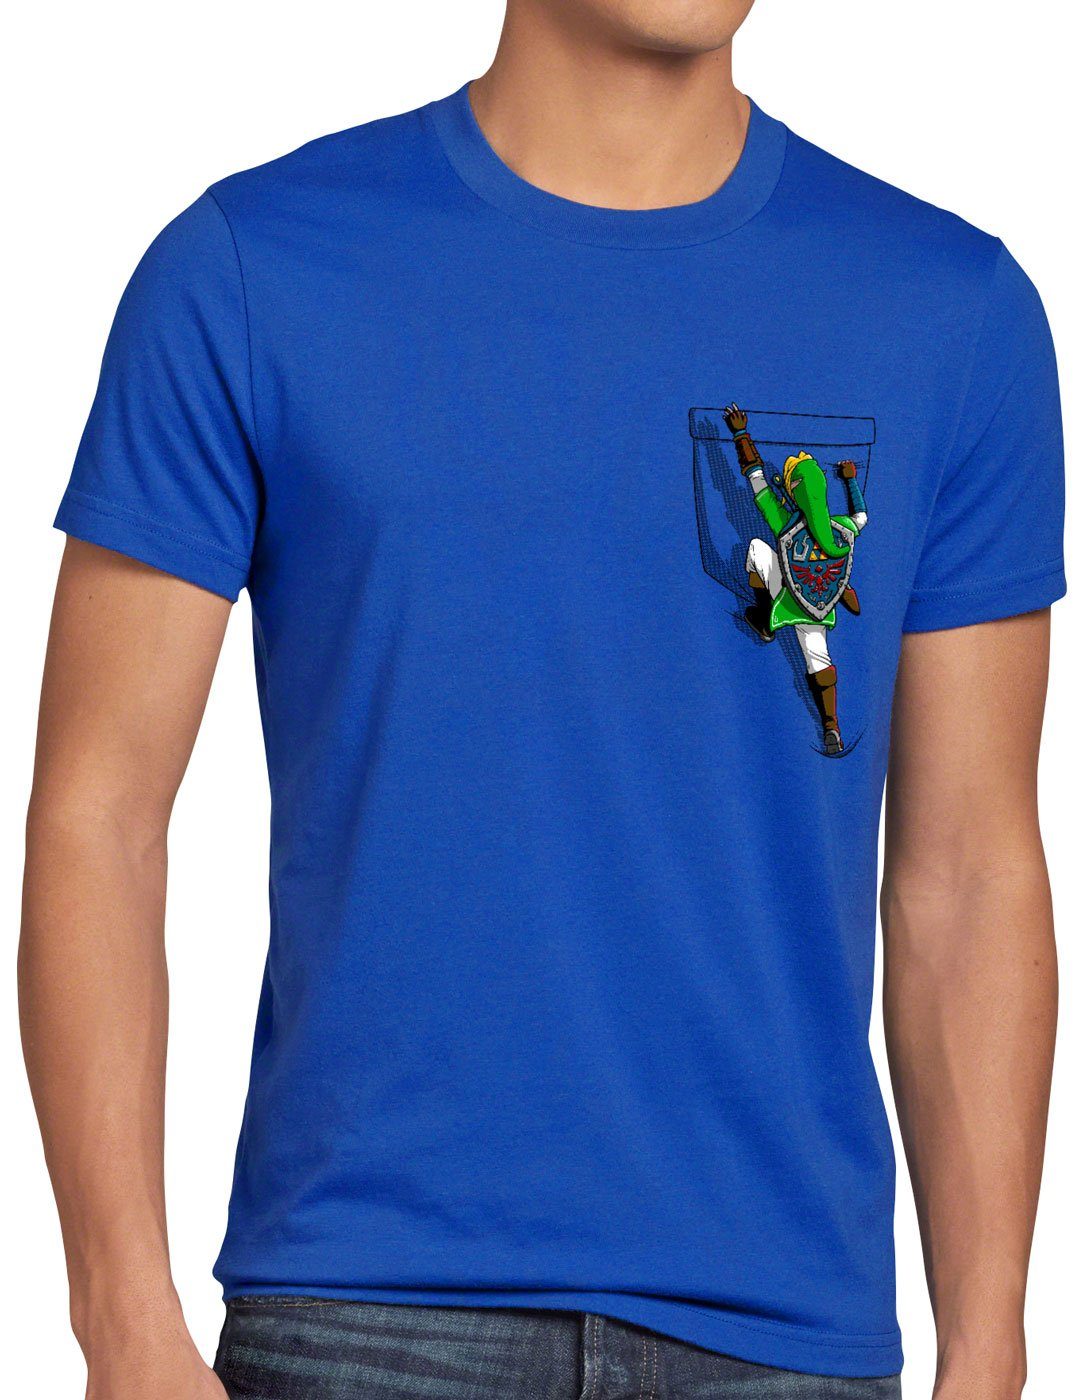 Print-Shirt T-Shirt Herren of blau Link wild style3 ocarina the switch snes breath Brusttasche